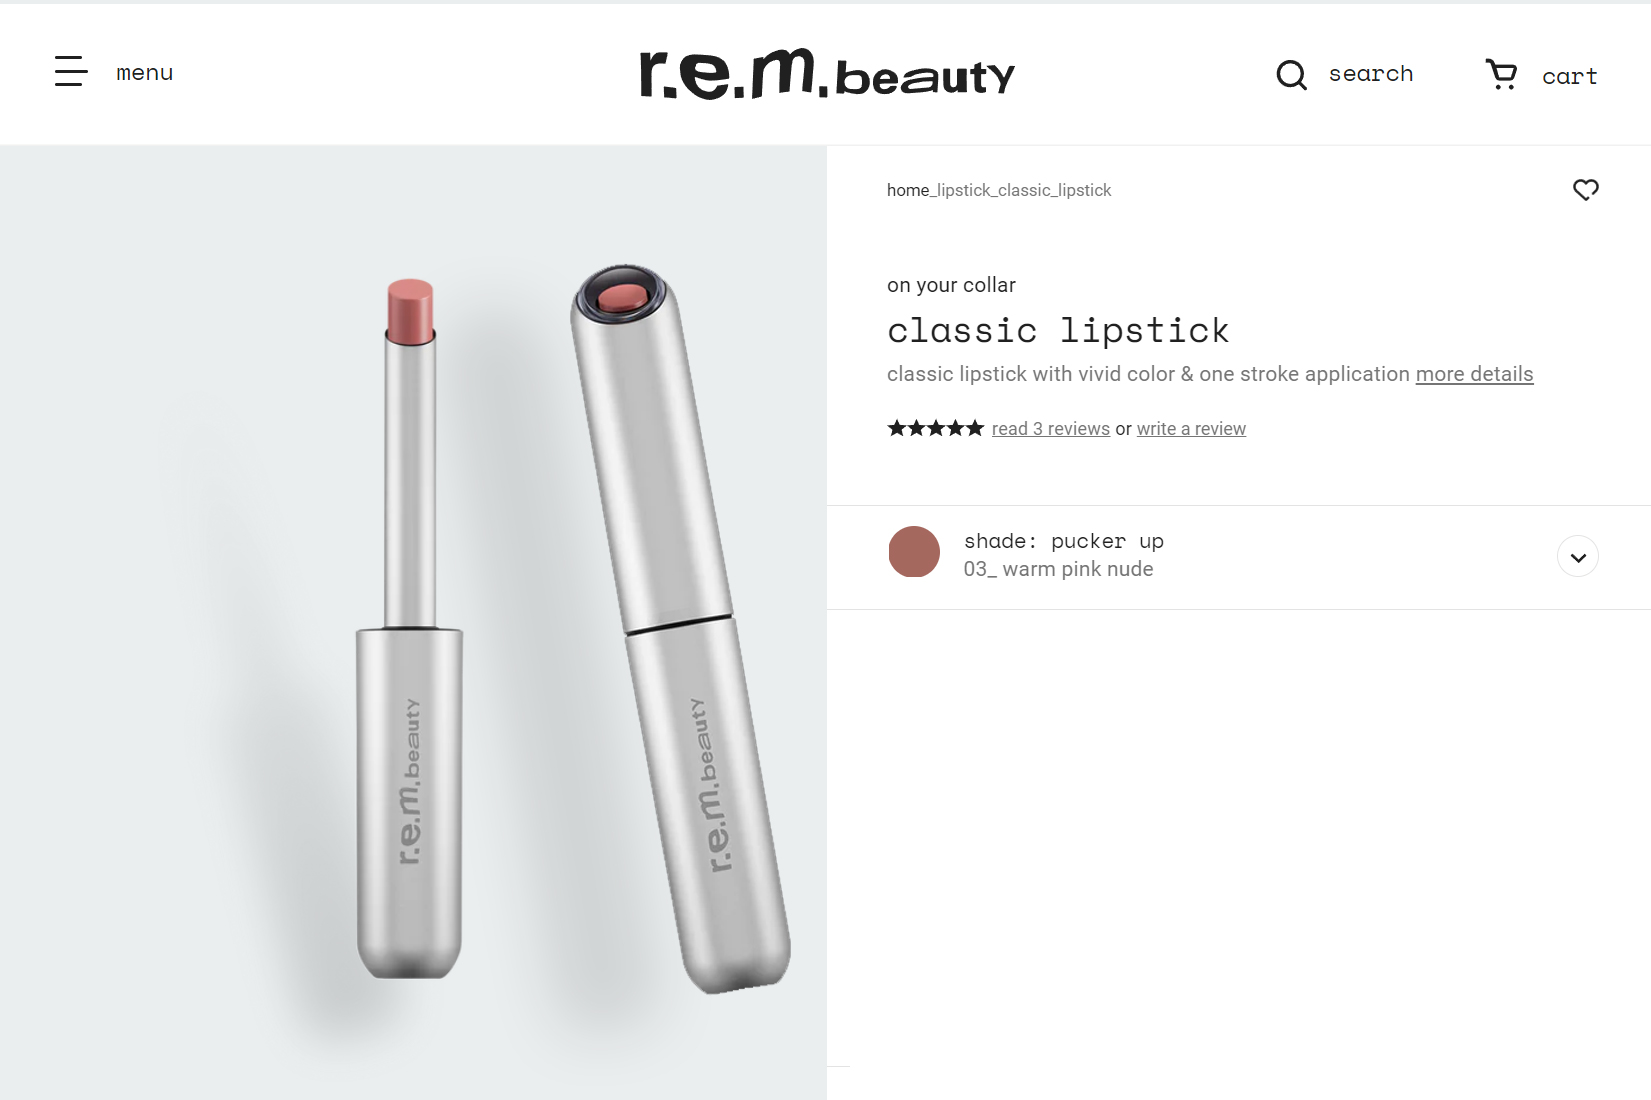 r.e.m. beauty classic lipstick - We Love it!